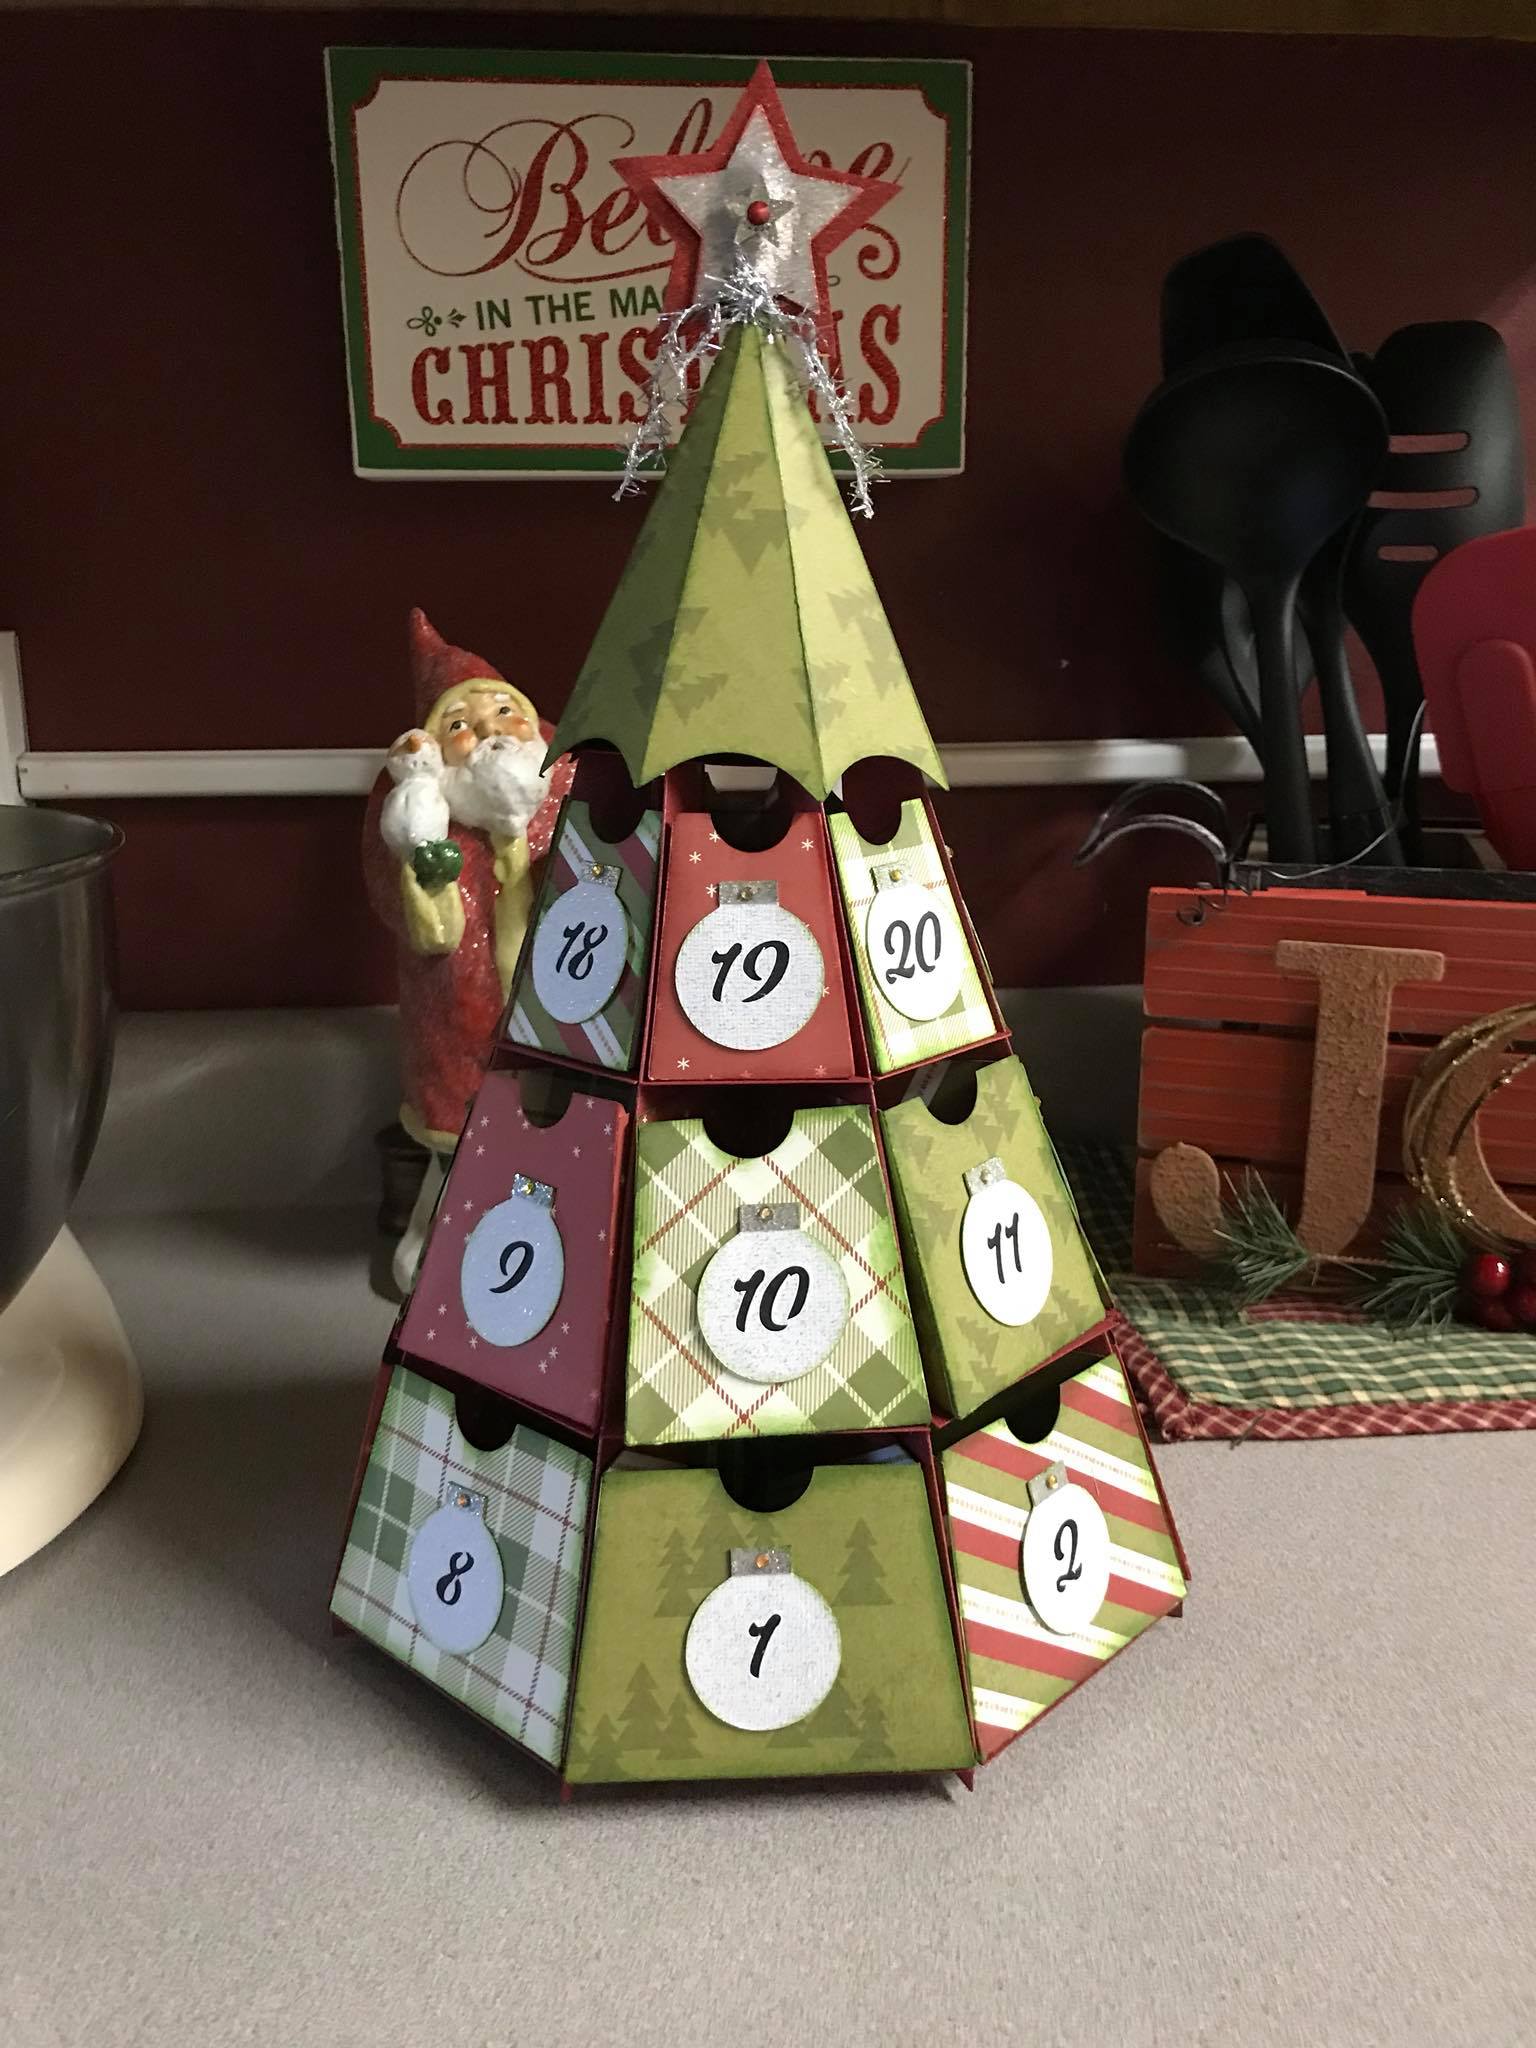 Christmas Tree Advent Calendar 25 Days of Maker Projects! Jennifer Maker